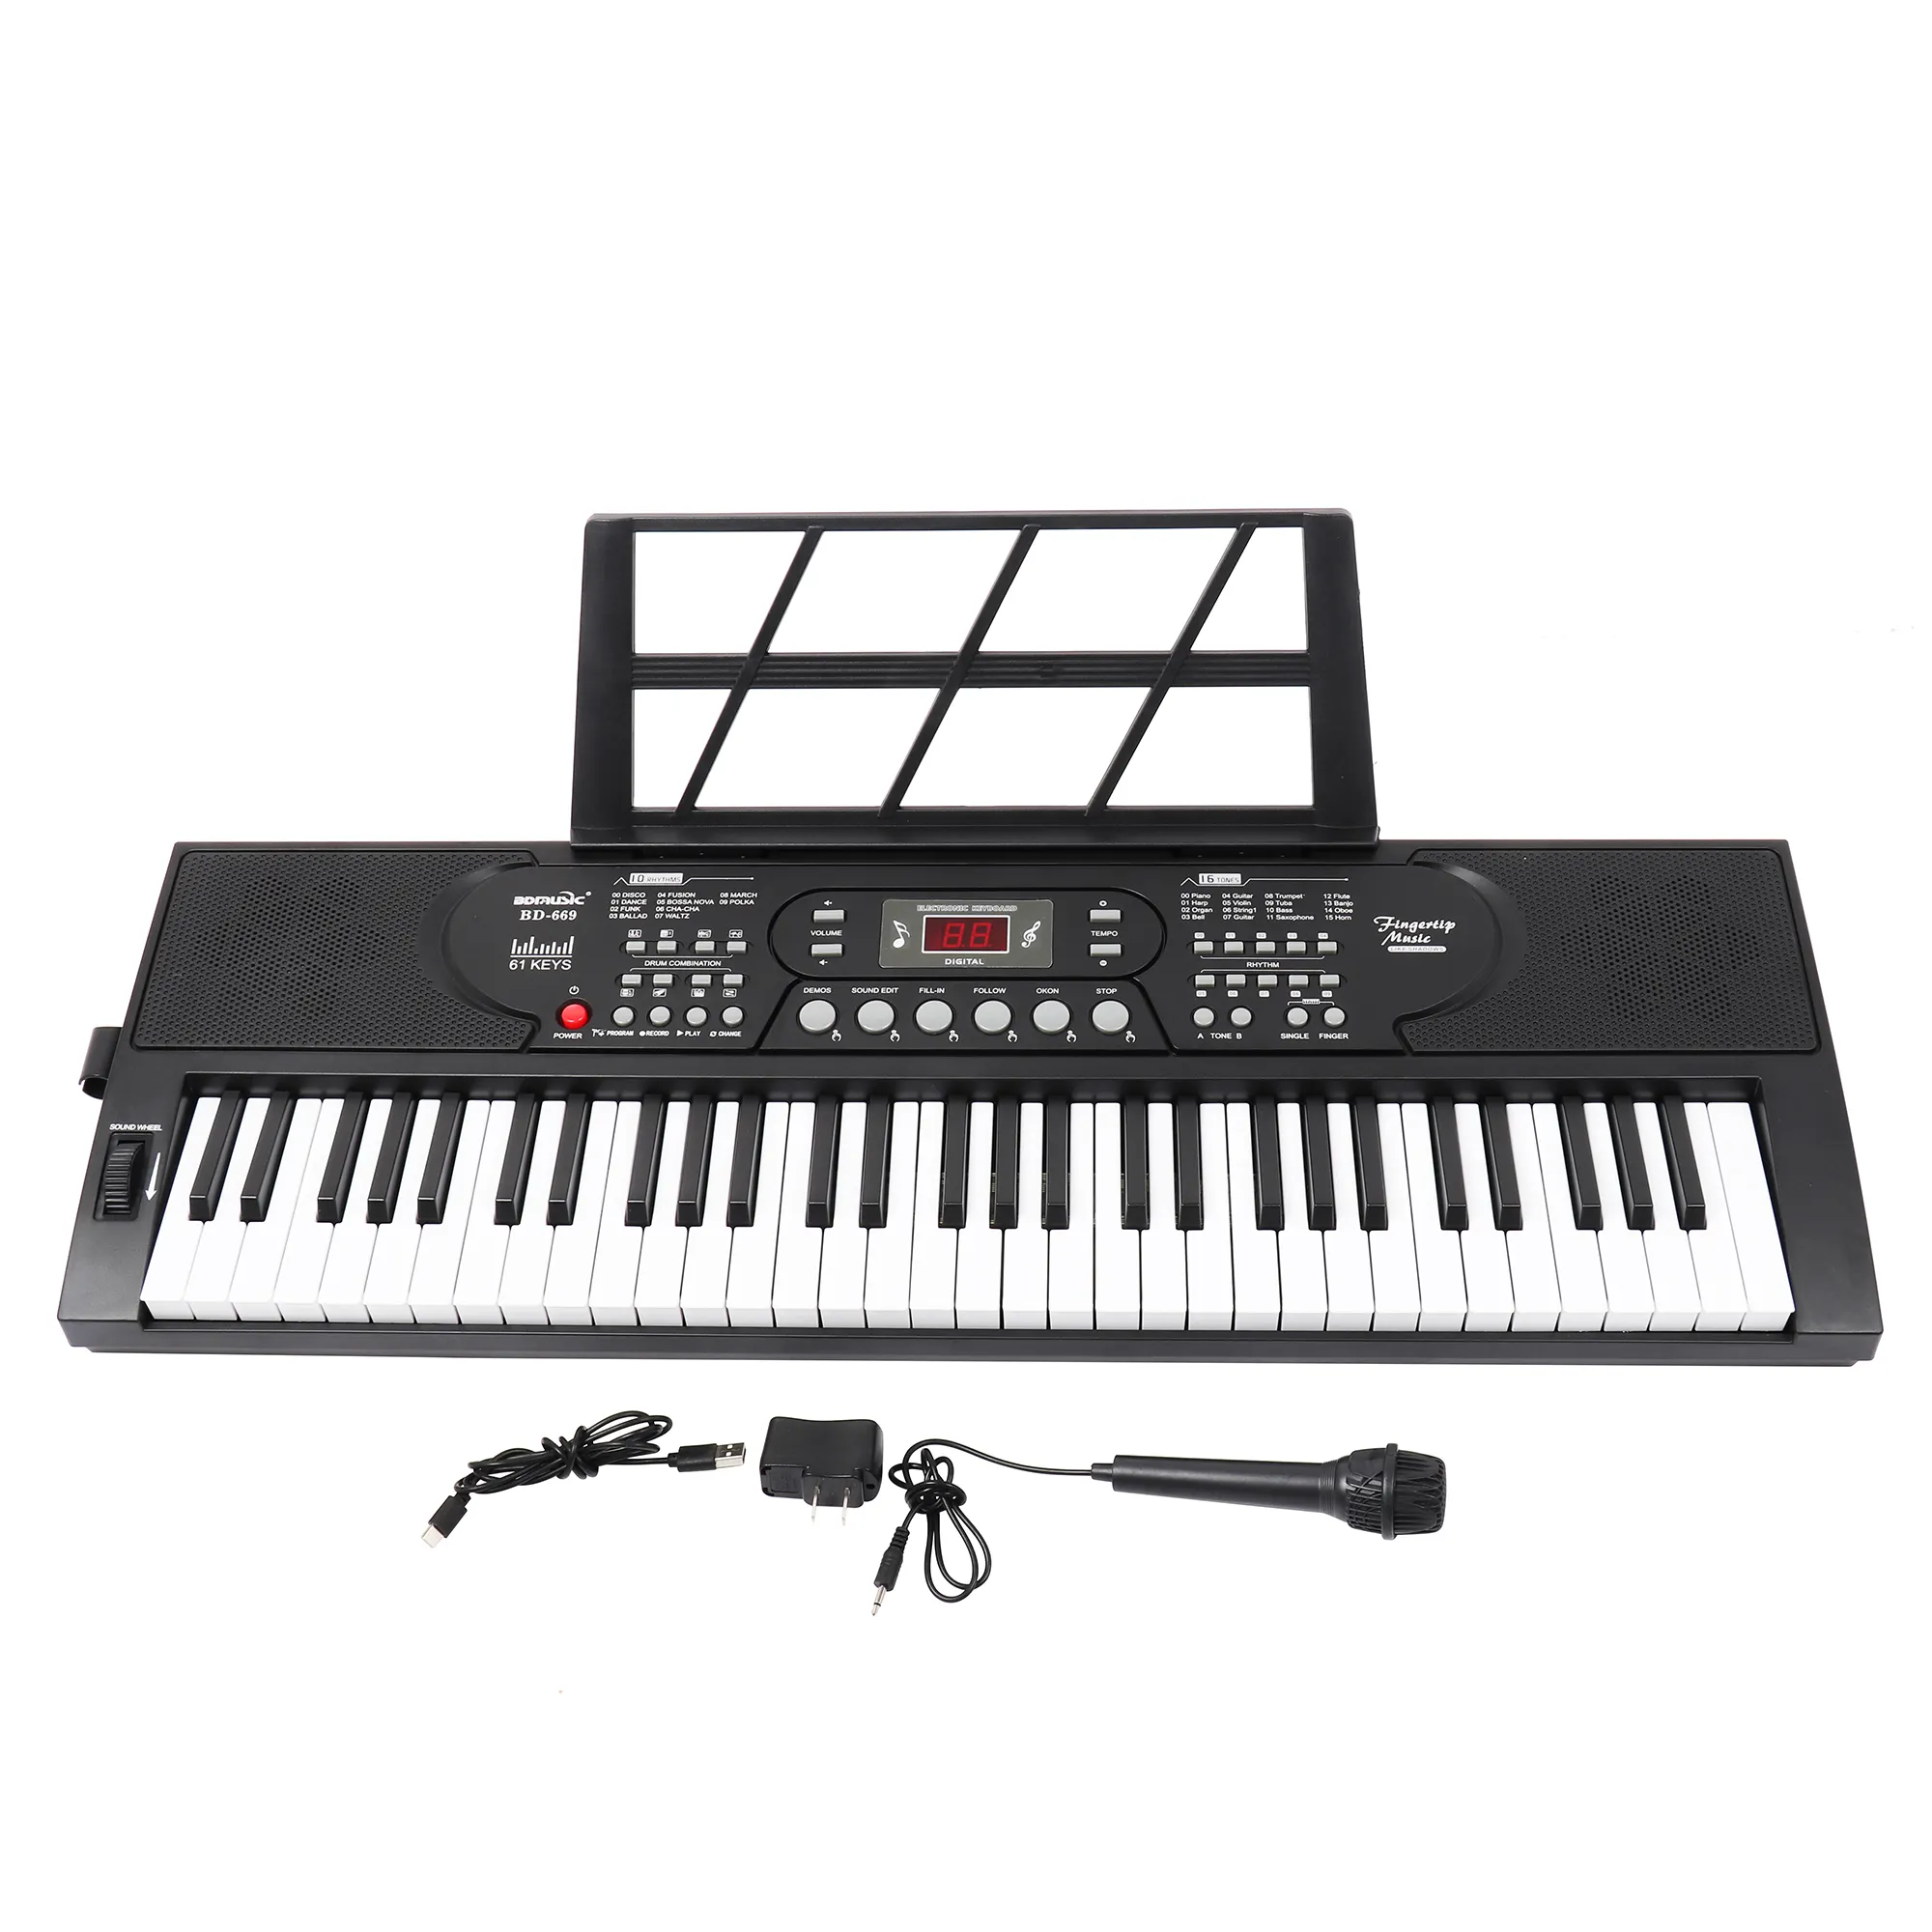 61 teclas profissional midi criança, teclado eletrônico teclado piano dois alto-falante midi teclado com microfone